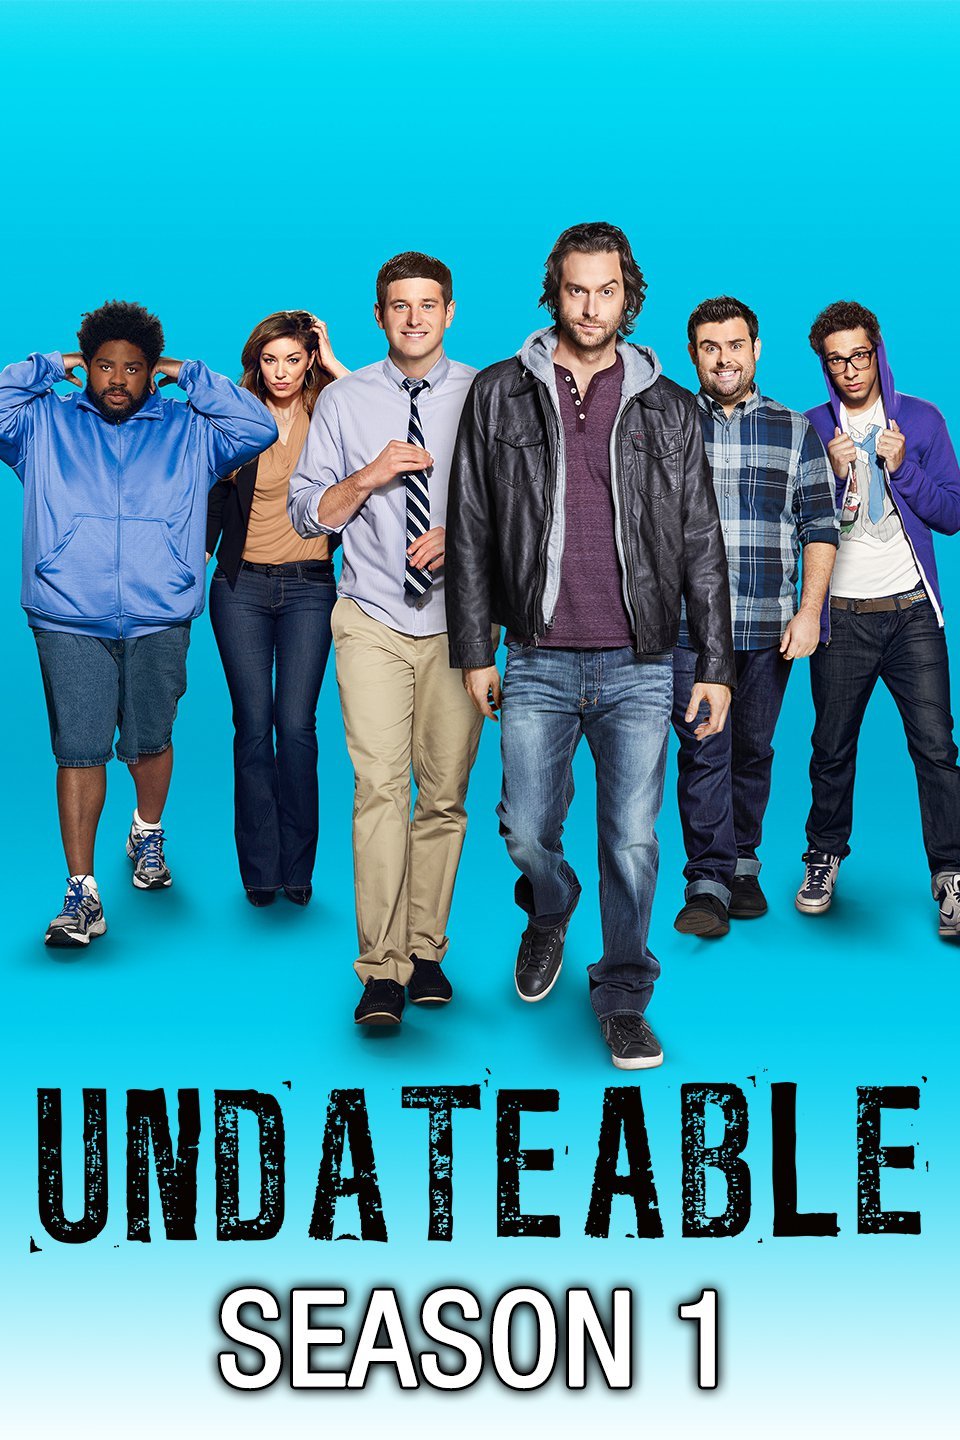 The undateables season 9